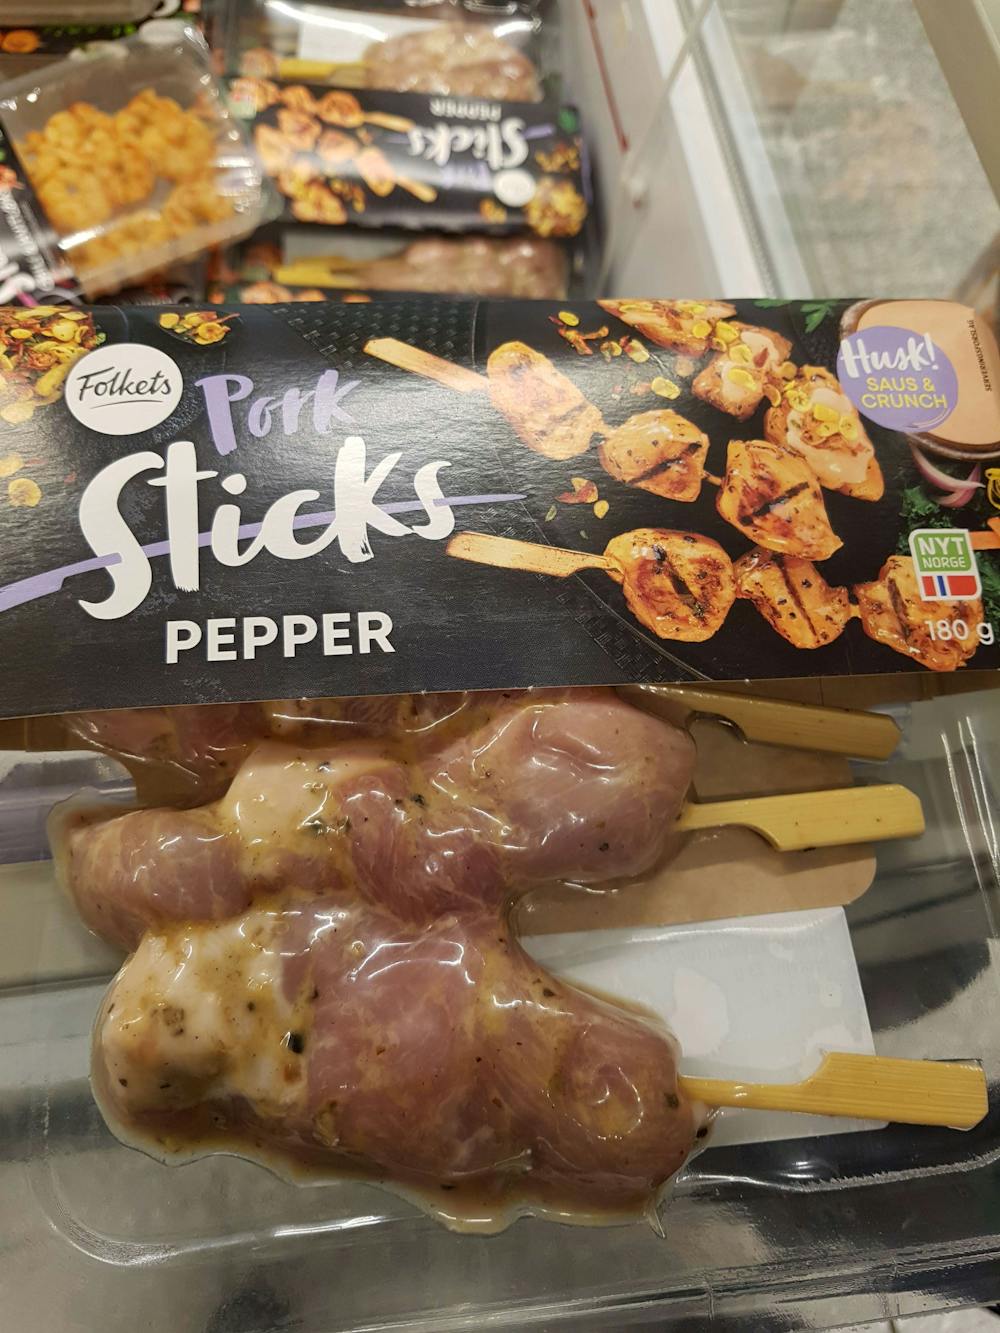 Pork sticks pepper, Folkets